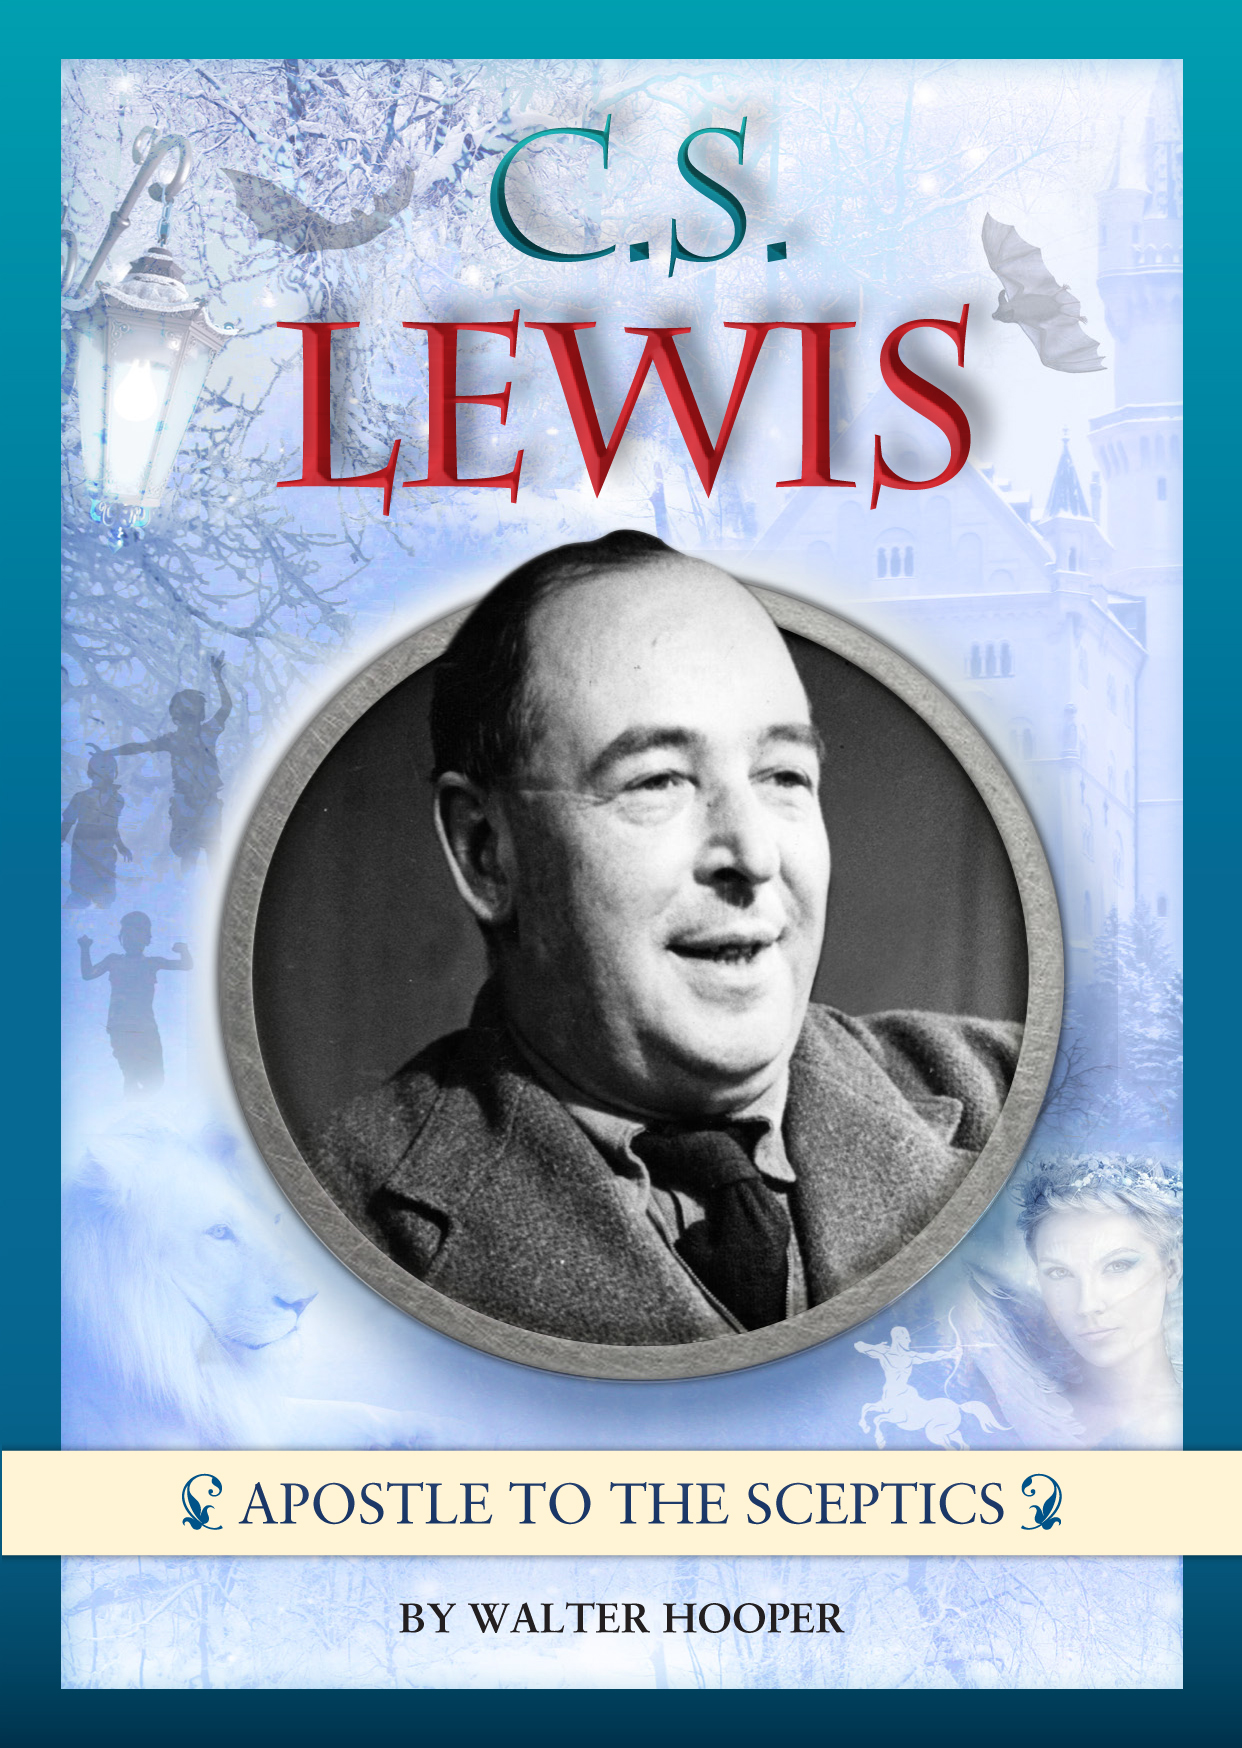 the books of cs lewis